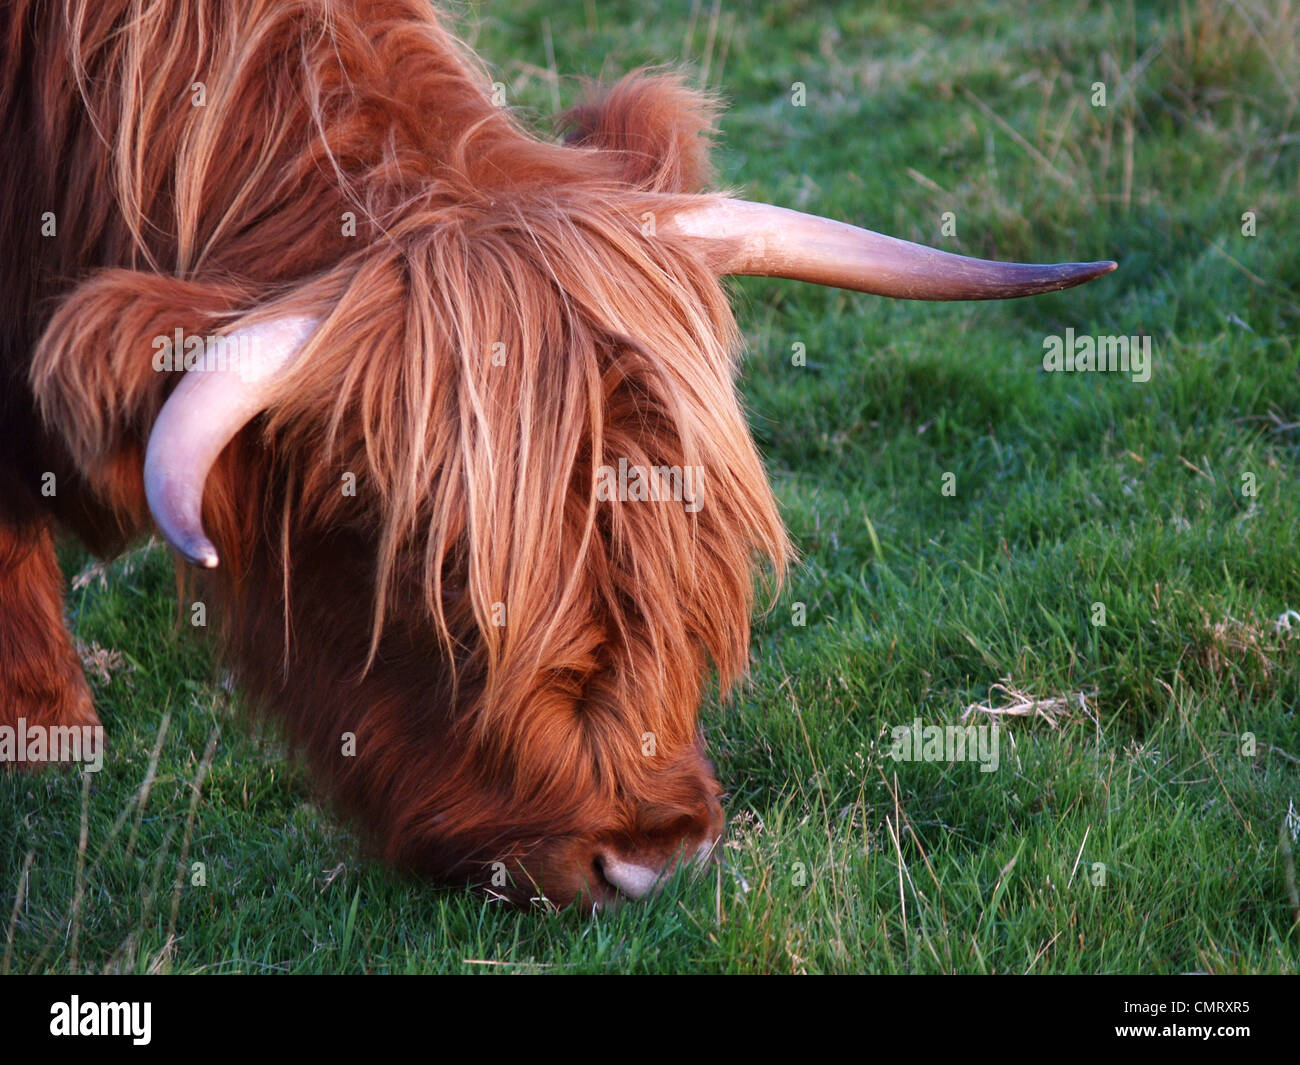 Vaca higland escocesa Foto de stock